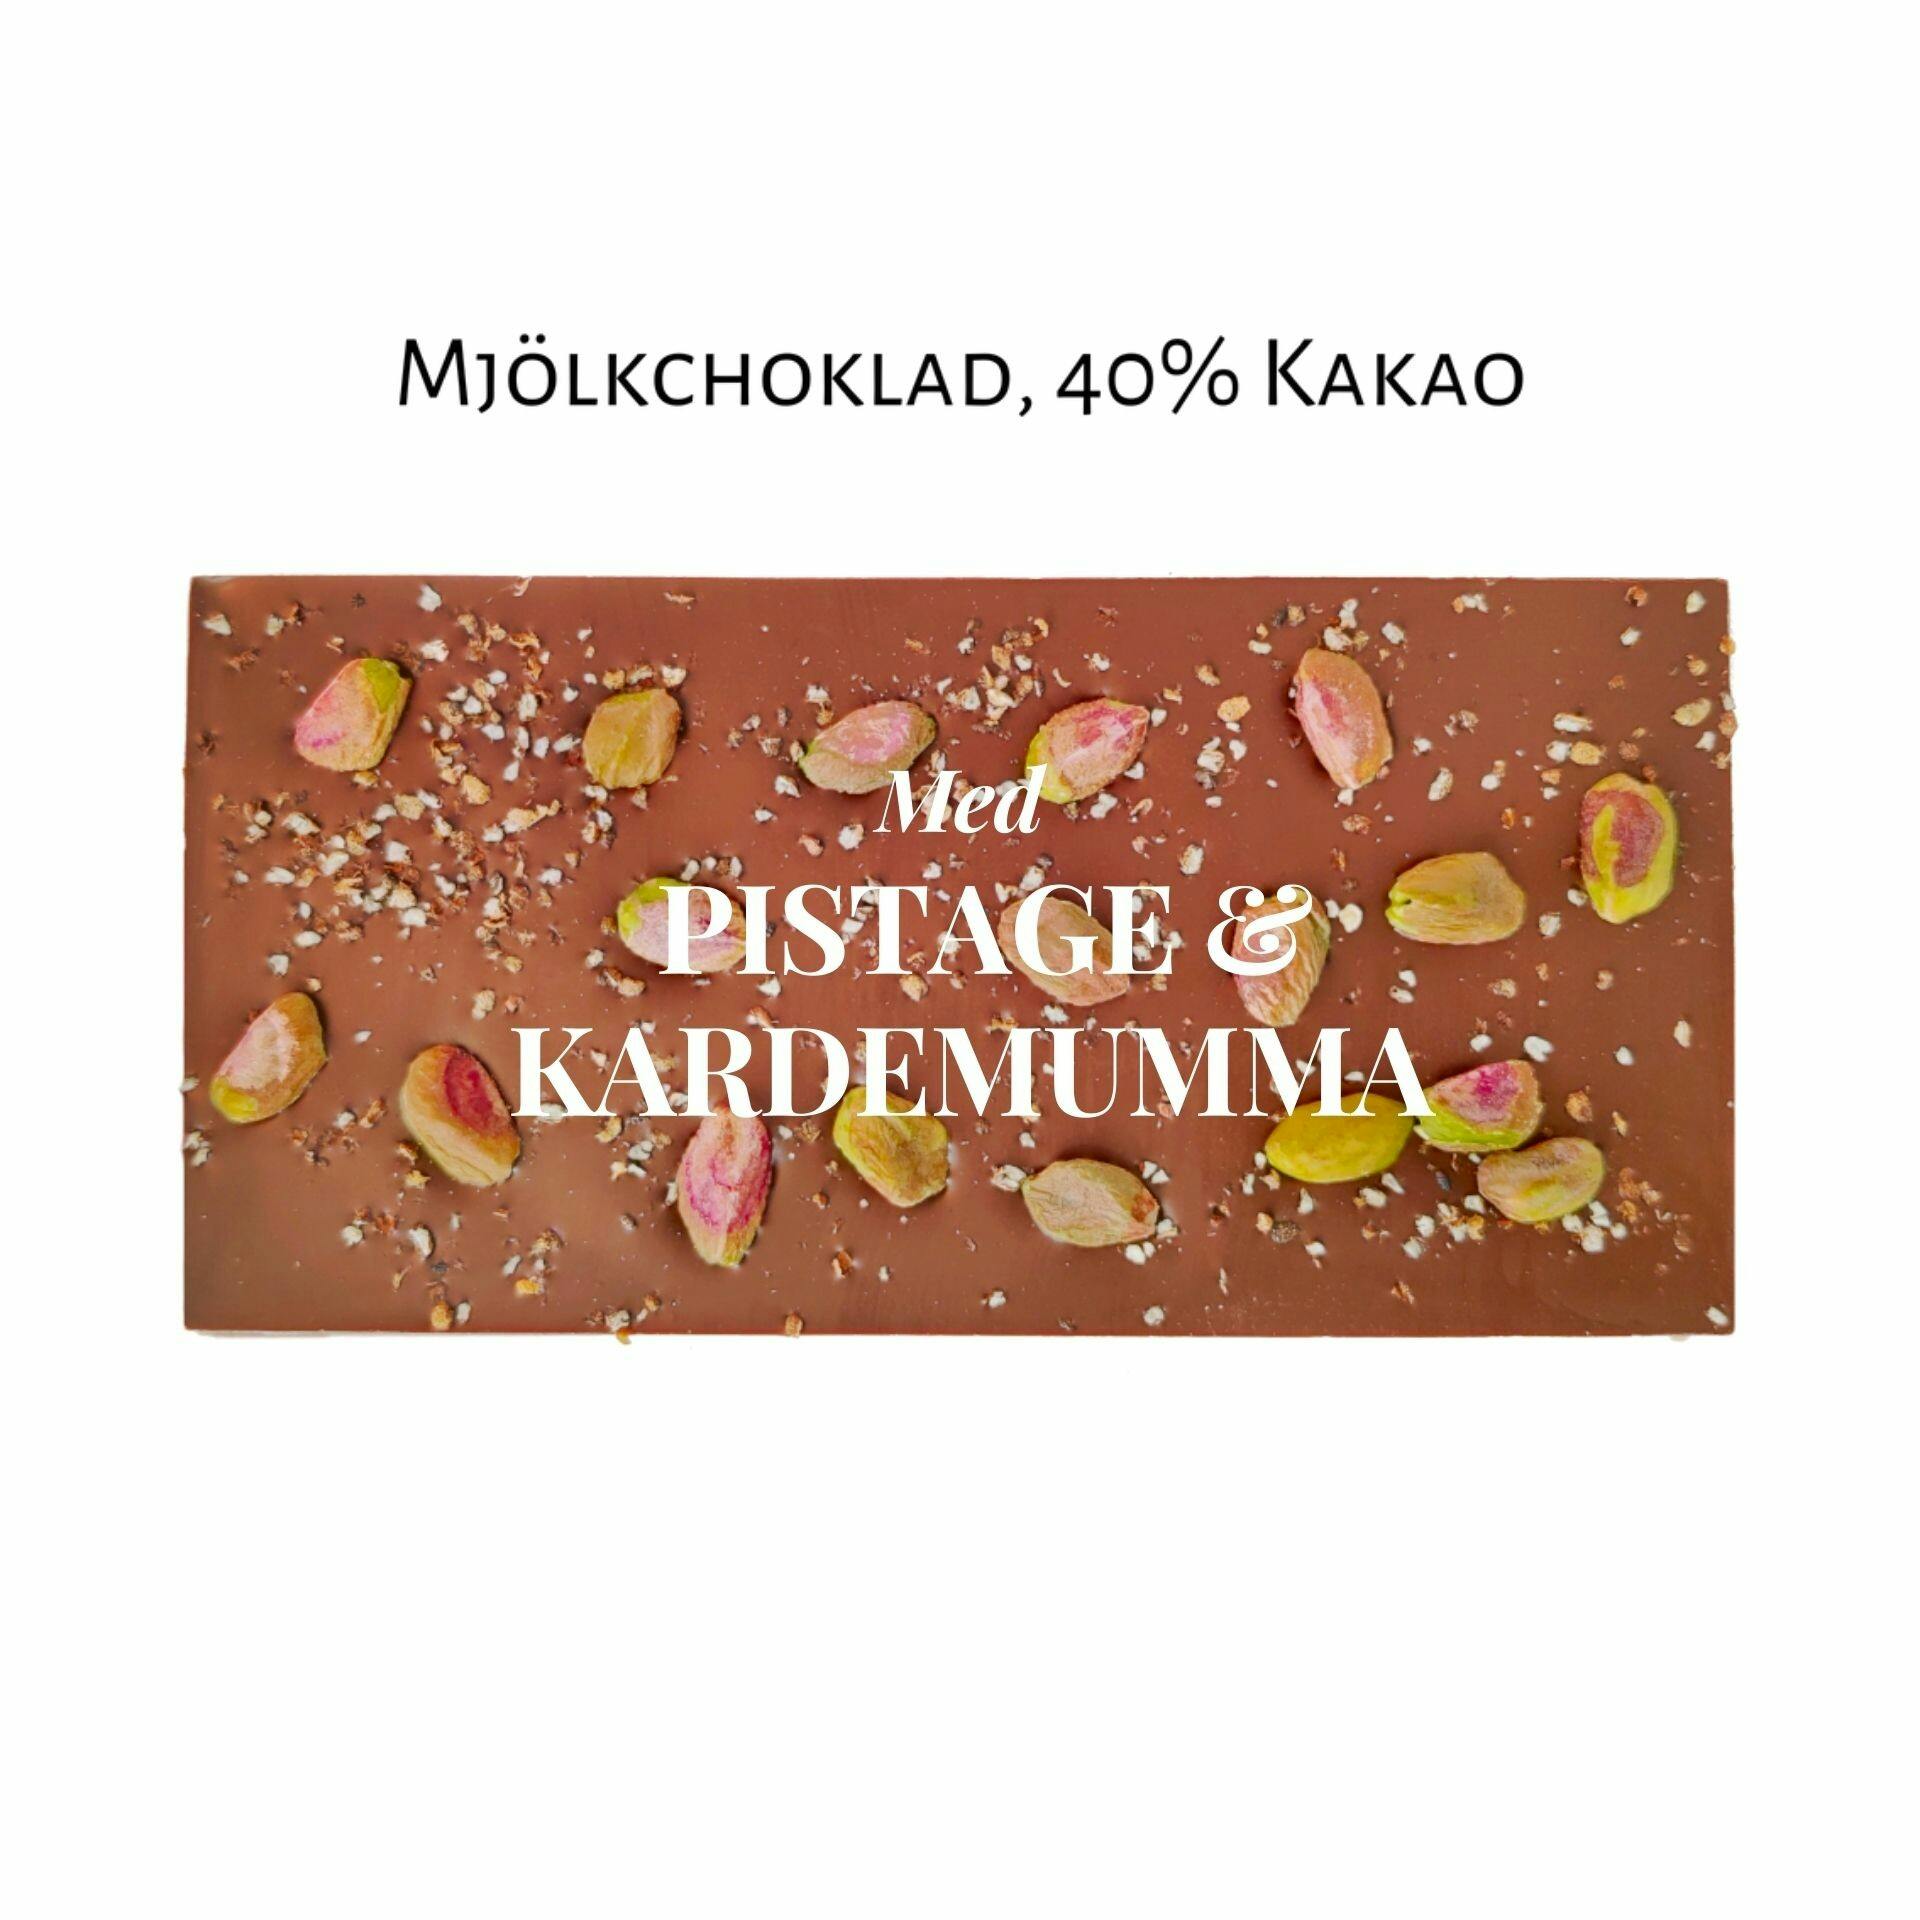 40% Mjölkchoklad - Pistage & Kardemumma 100g (x 10st)